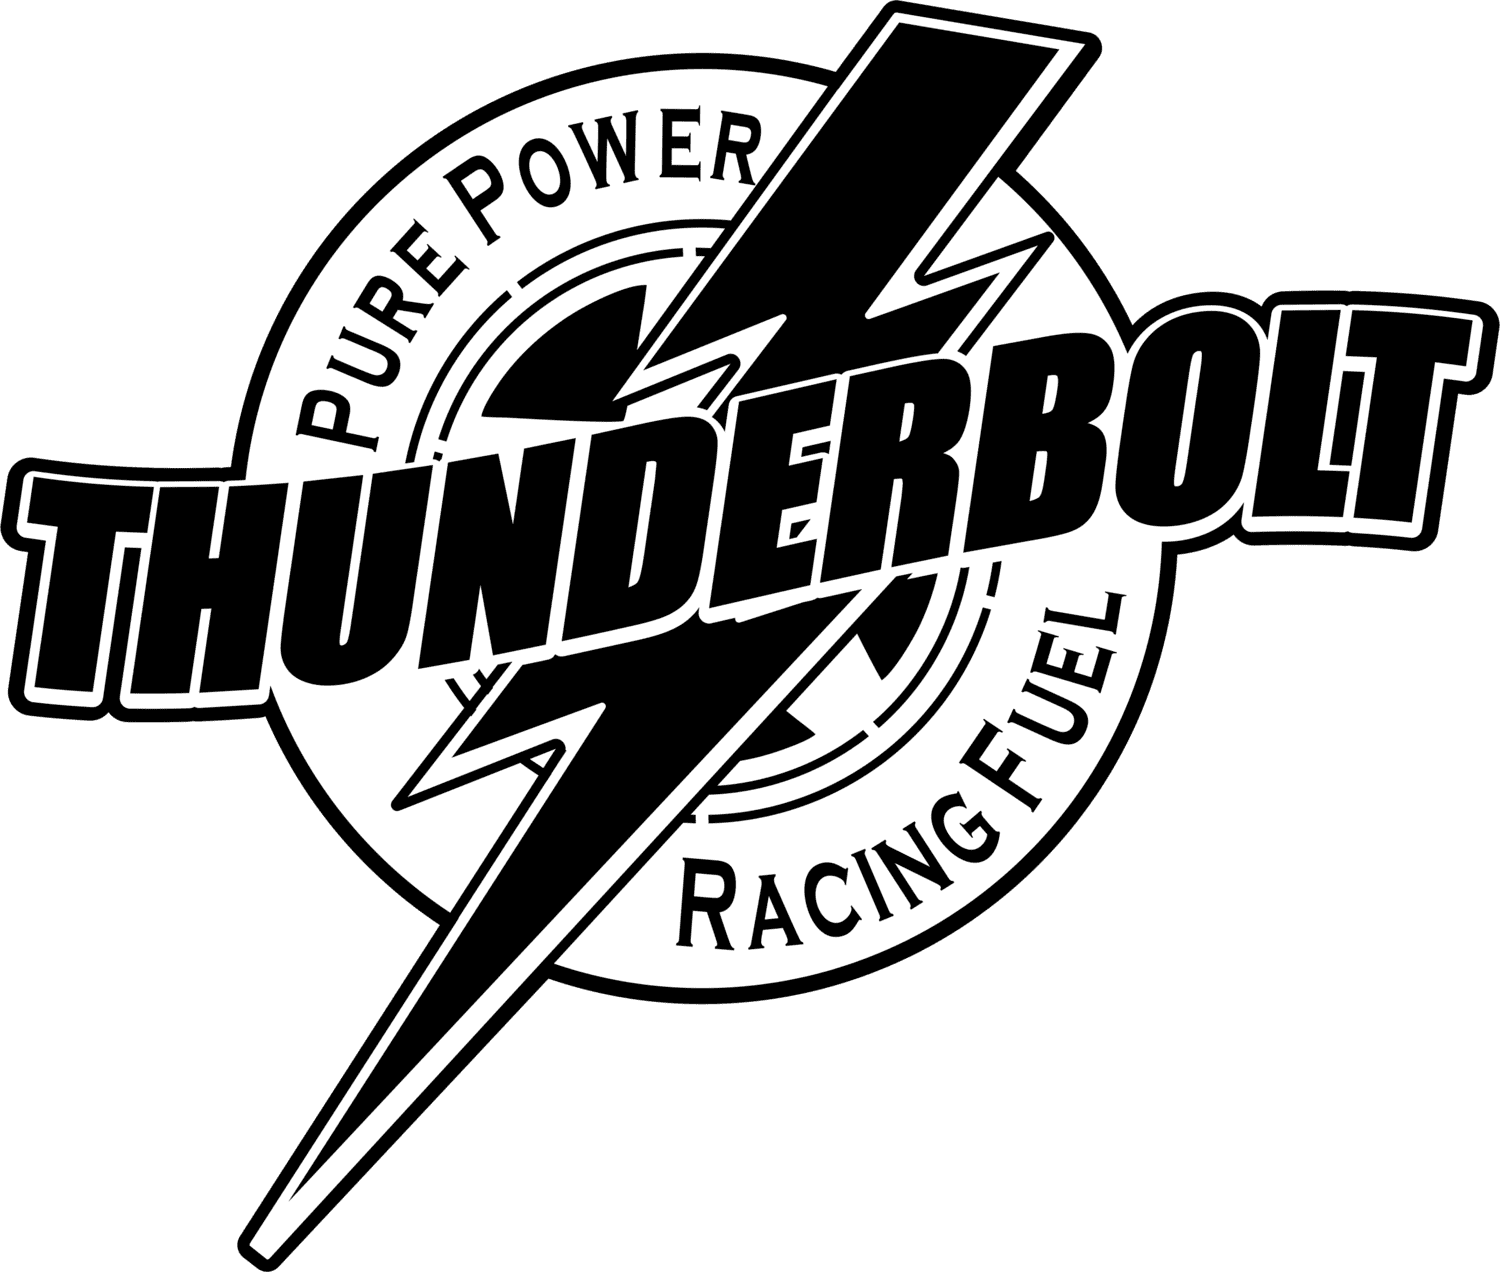 www.thunderboltracingfuel.com